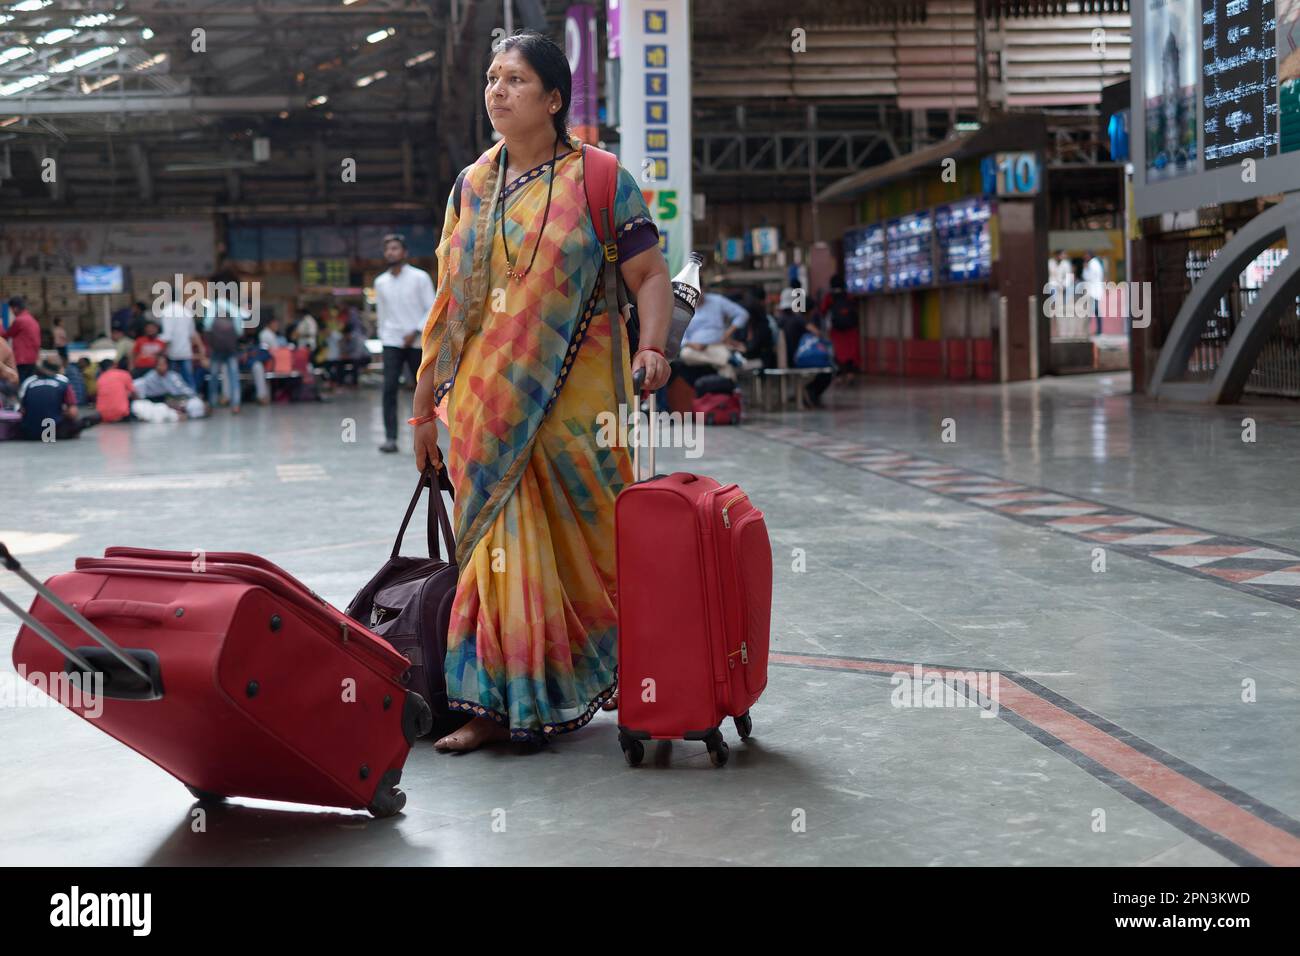 An Indian woman traveller, clad in a colorful sari, pulling her luggage through (railway station) Chhatrapati Shivaji Maharaj Terminus; Mumbai, India Stock Photo